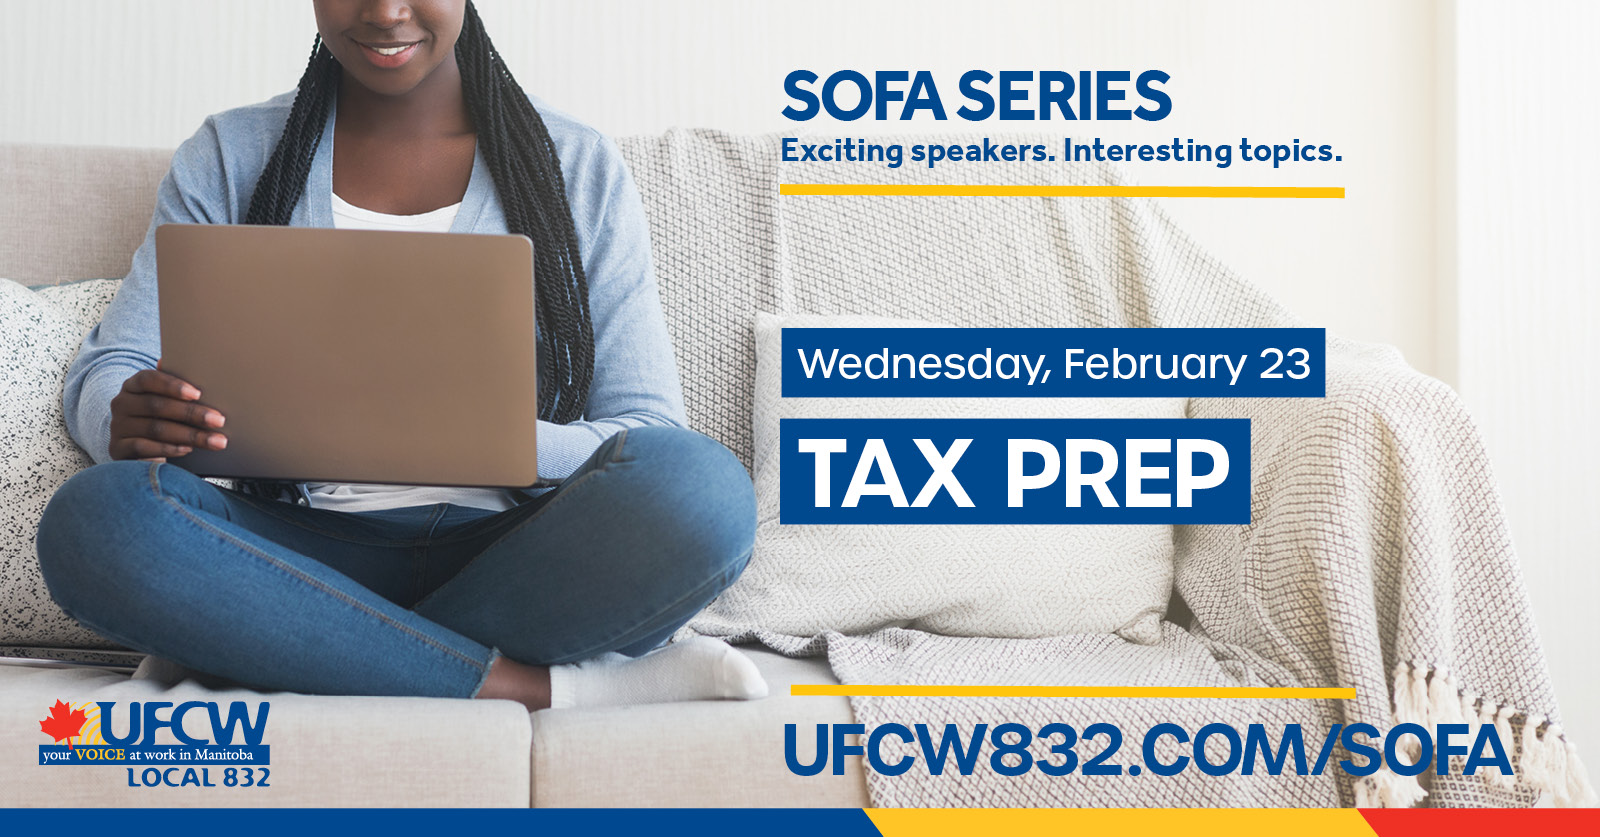 Sofa Series February: Tax Prep